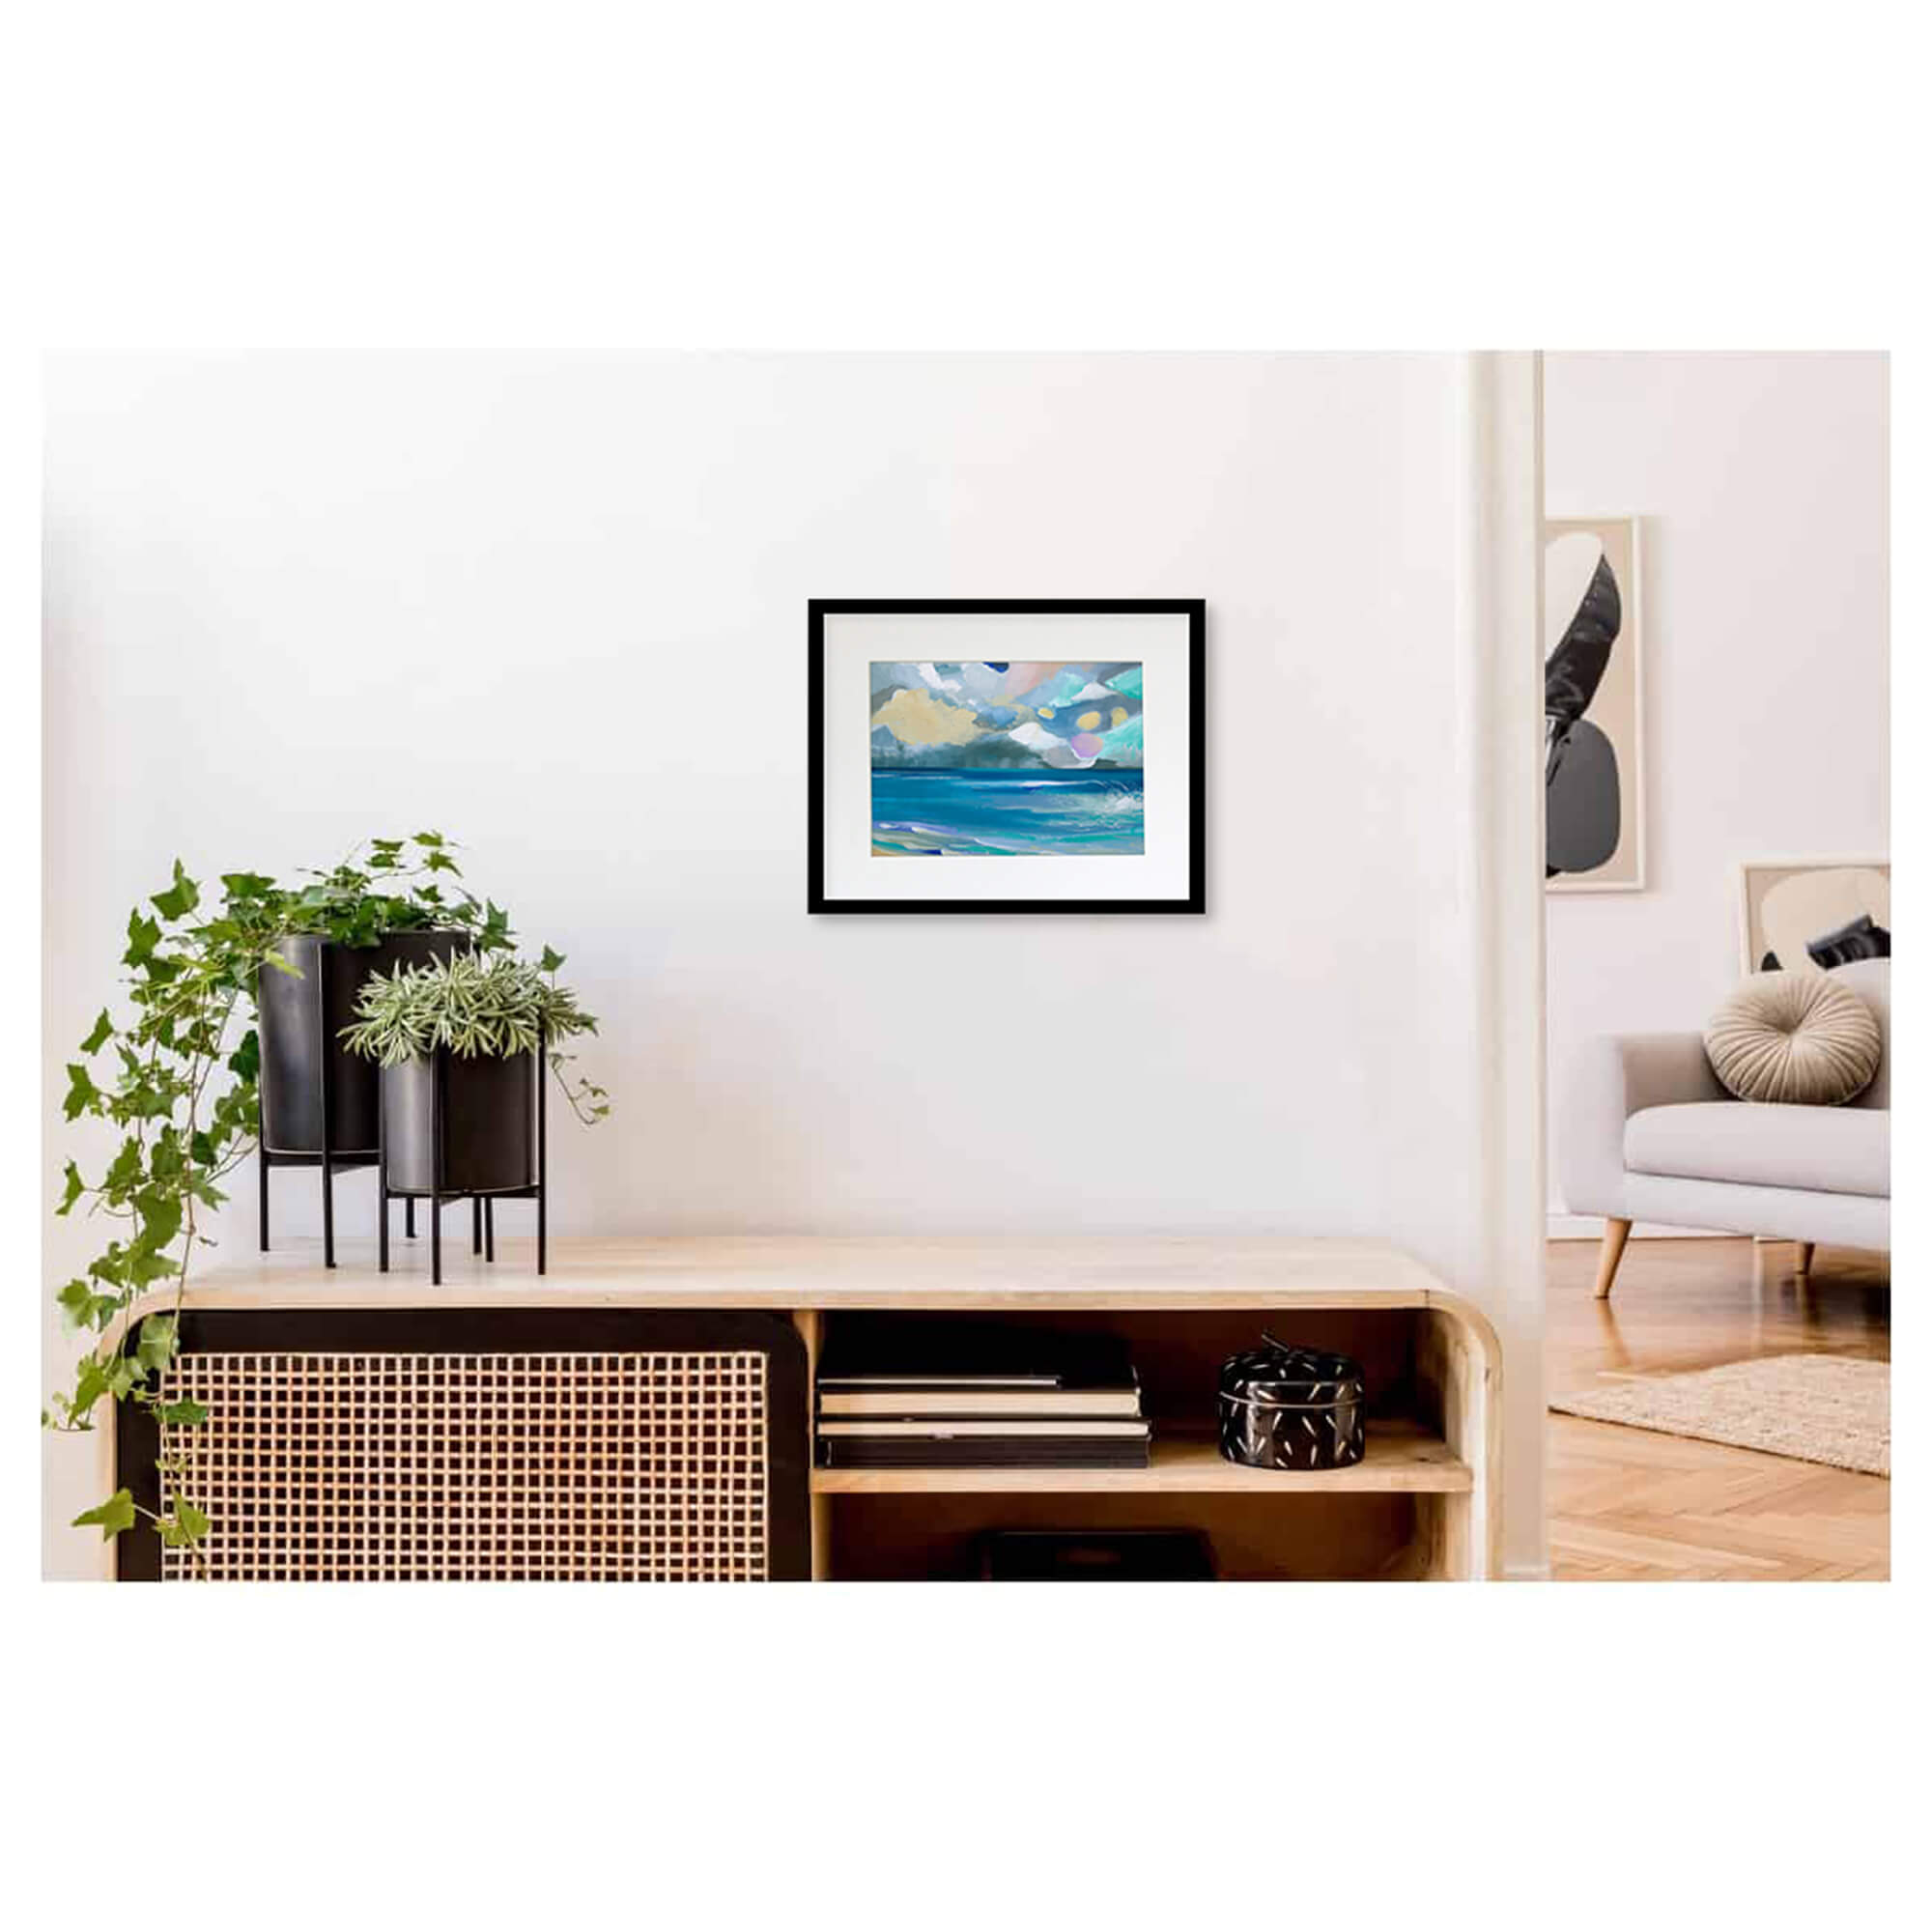 Framed matted art print of a serene seascape by Hawaii artist Saumolia Puapuaga